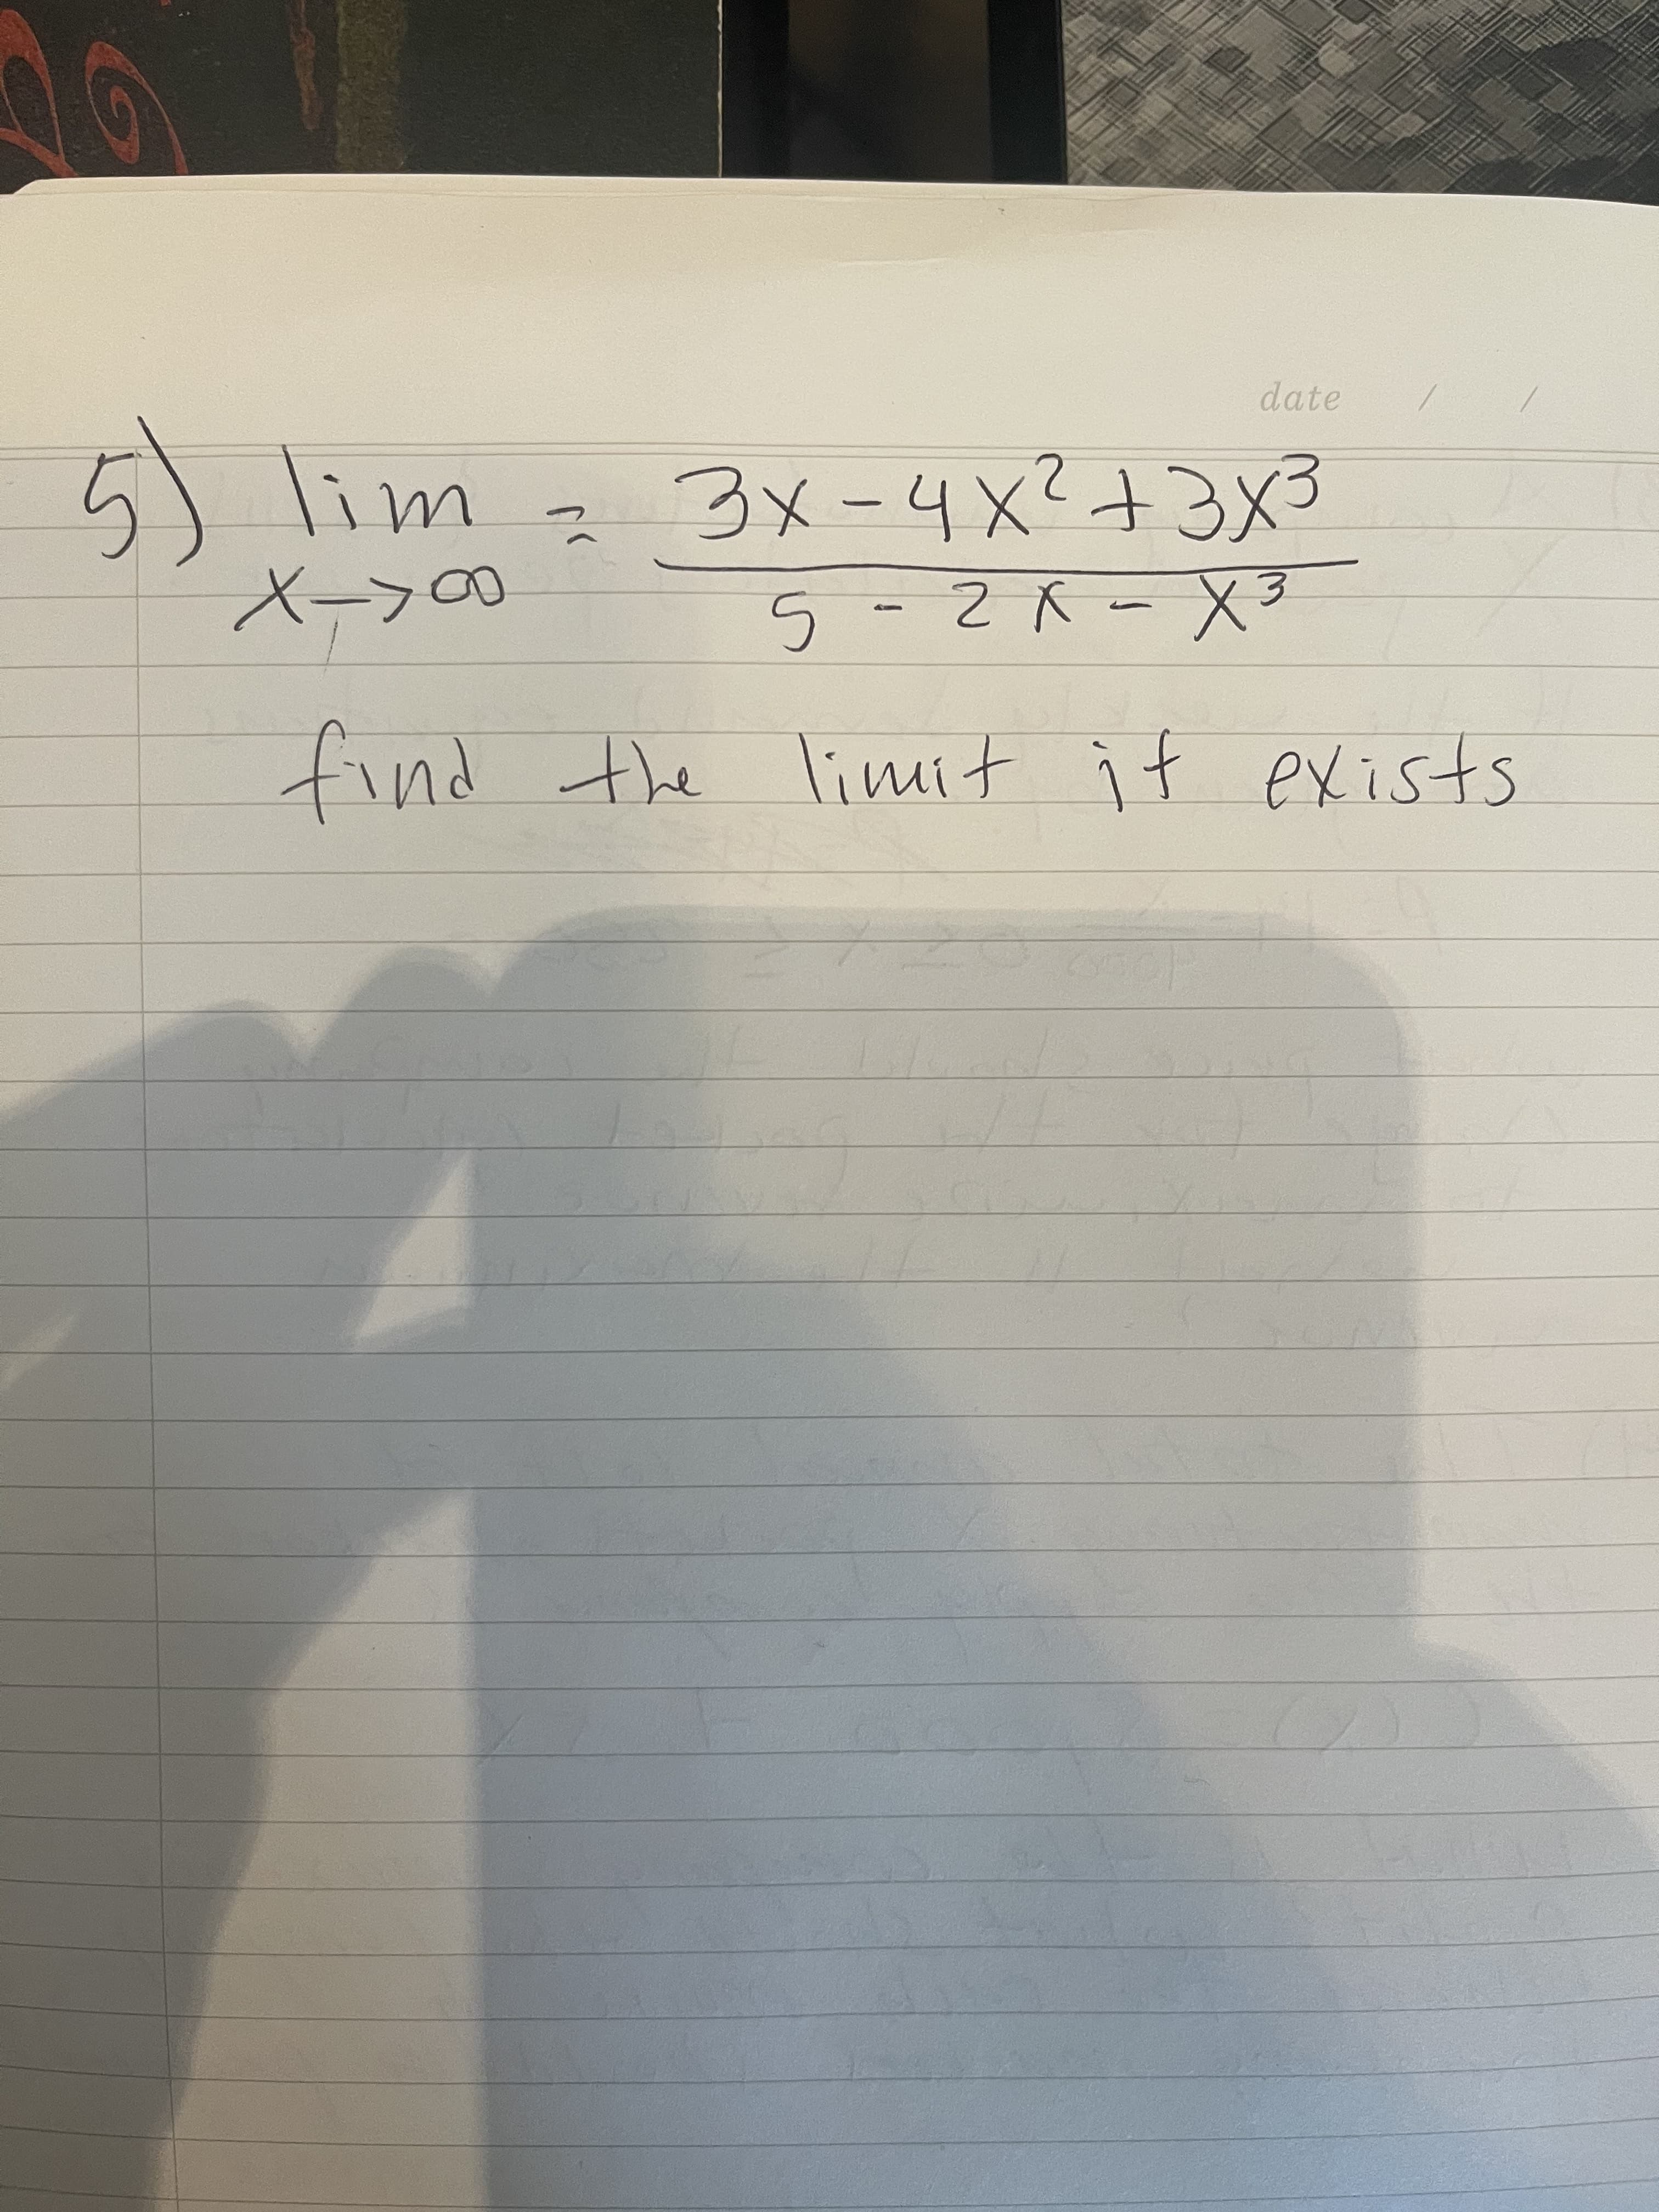 date
5) lim
3メー4x?43x3
5-2 x-X3
X->0
find the limit if exists
ìf
